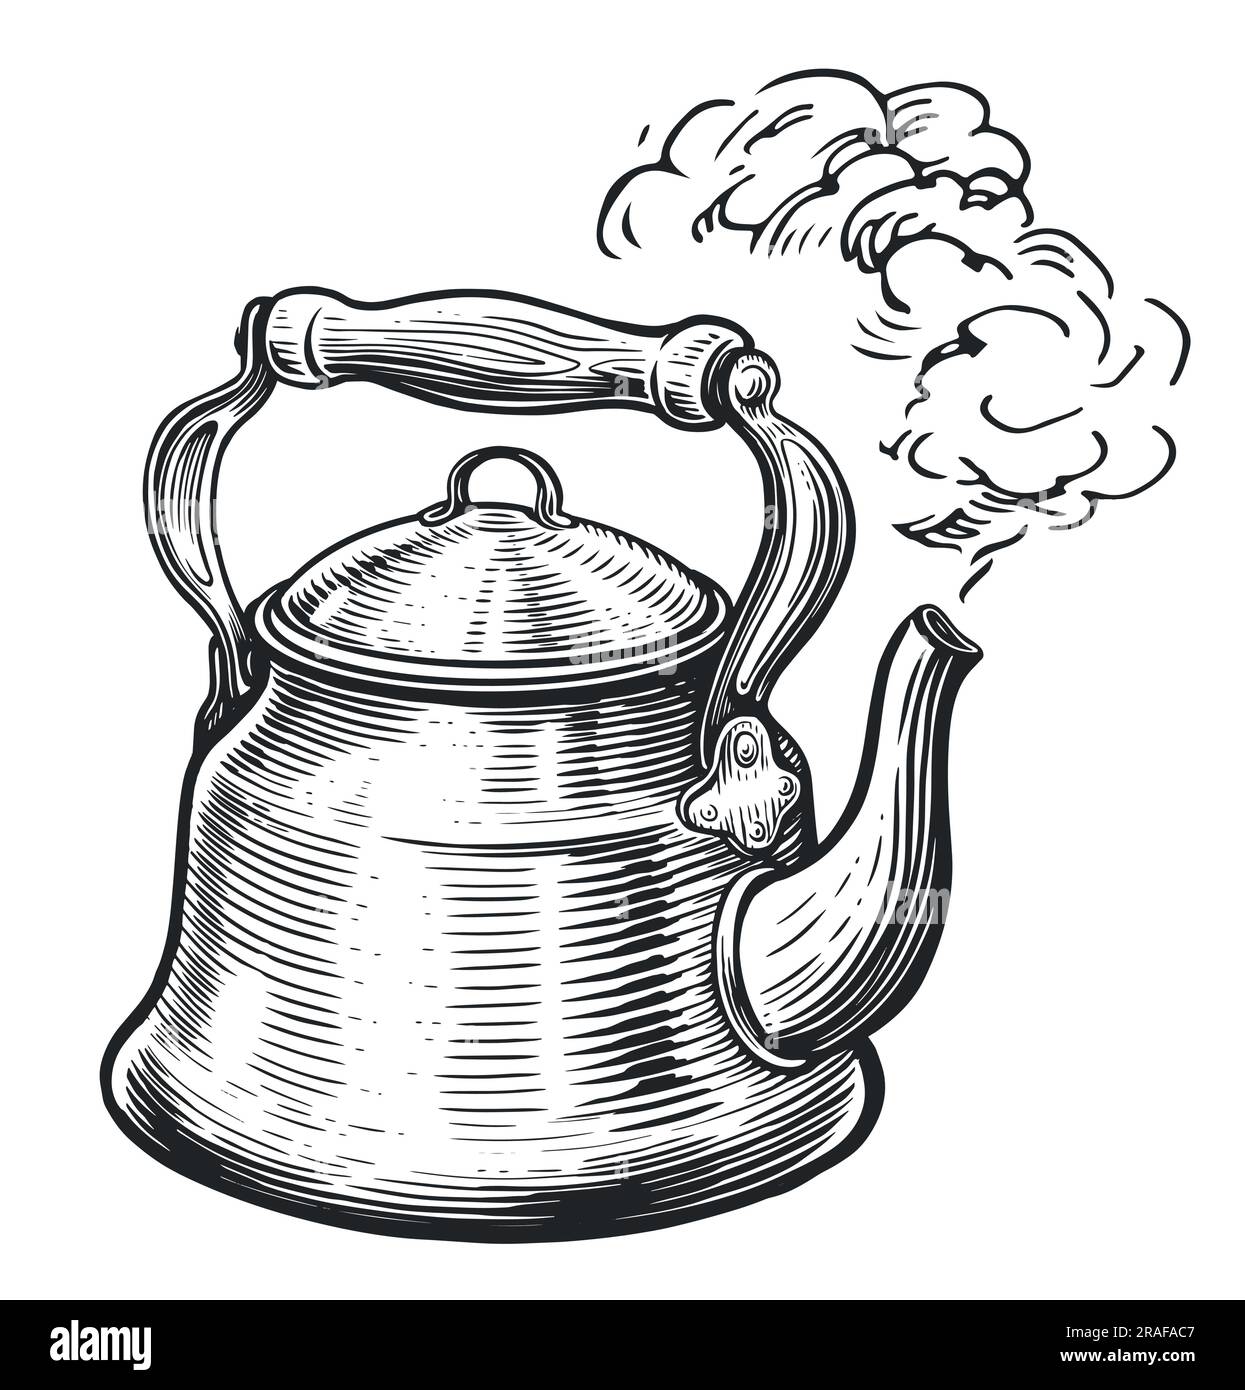 https://c8.alamy.com/comp/2RAFAC7/boiling-retro-kettle-style-old-engraving-sketch-vintage-vector-illustration-2RAFAC7.jpg